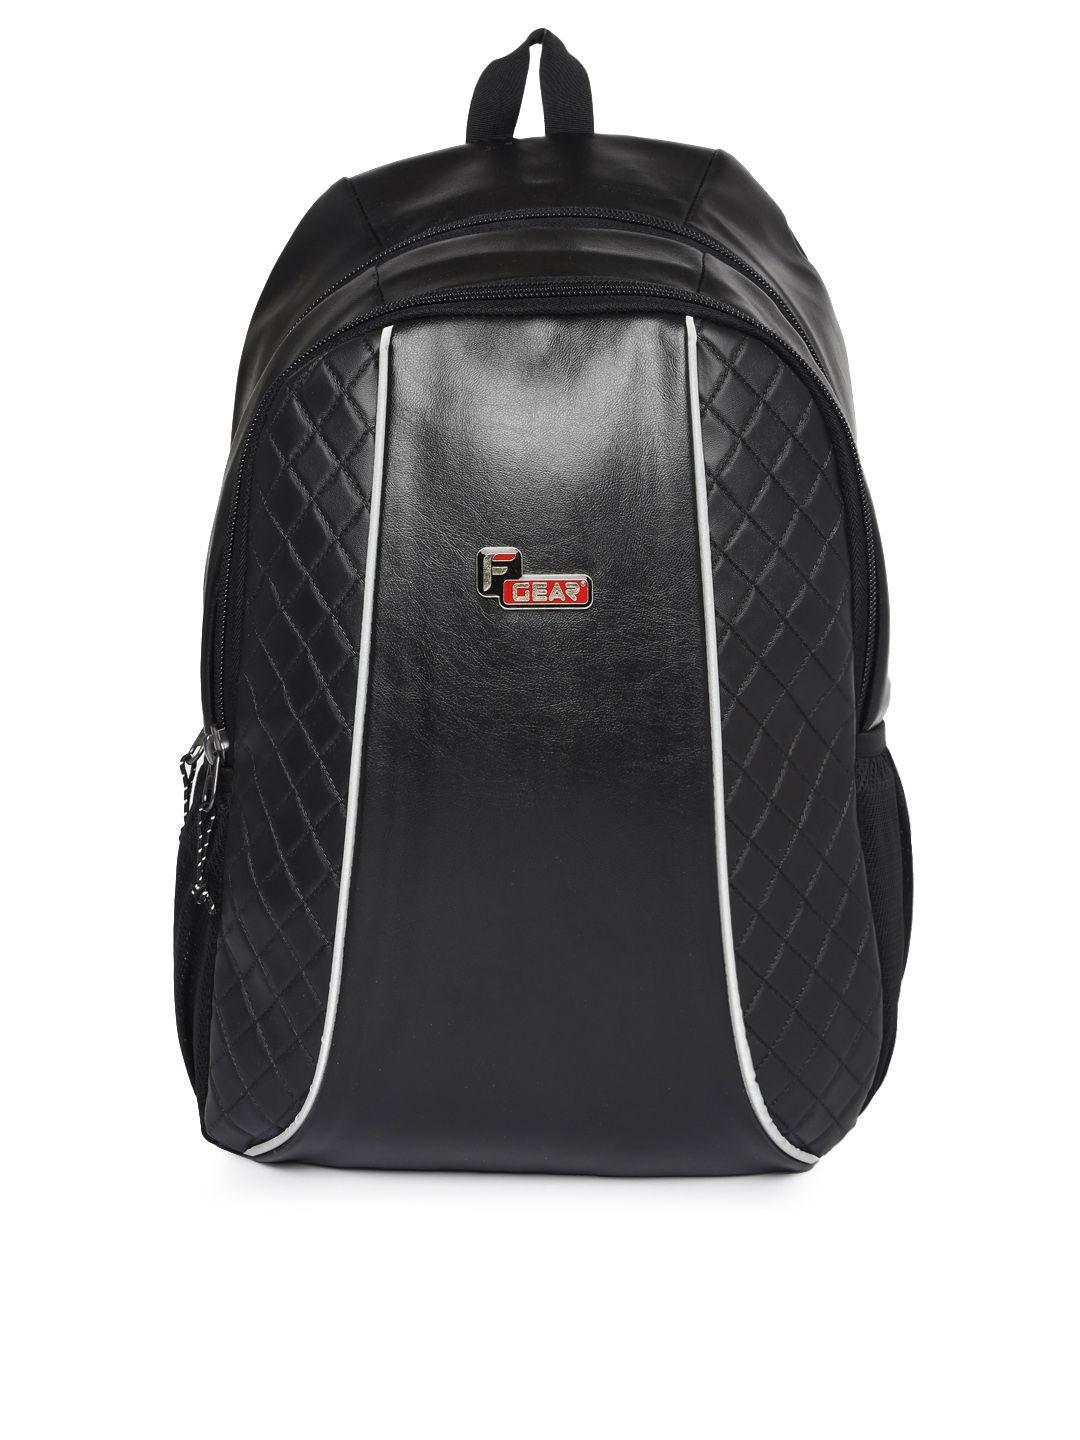 f gear unisex black solid carlton v2 backpack